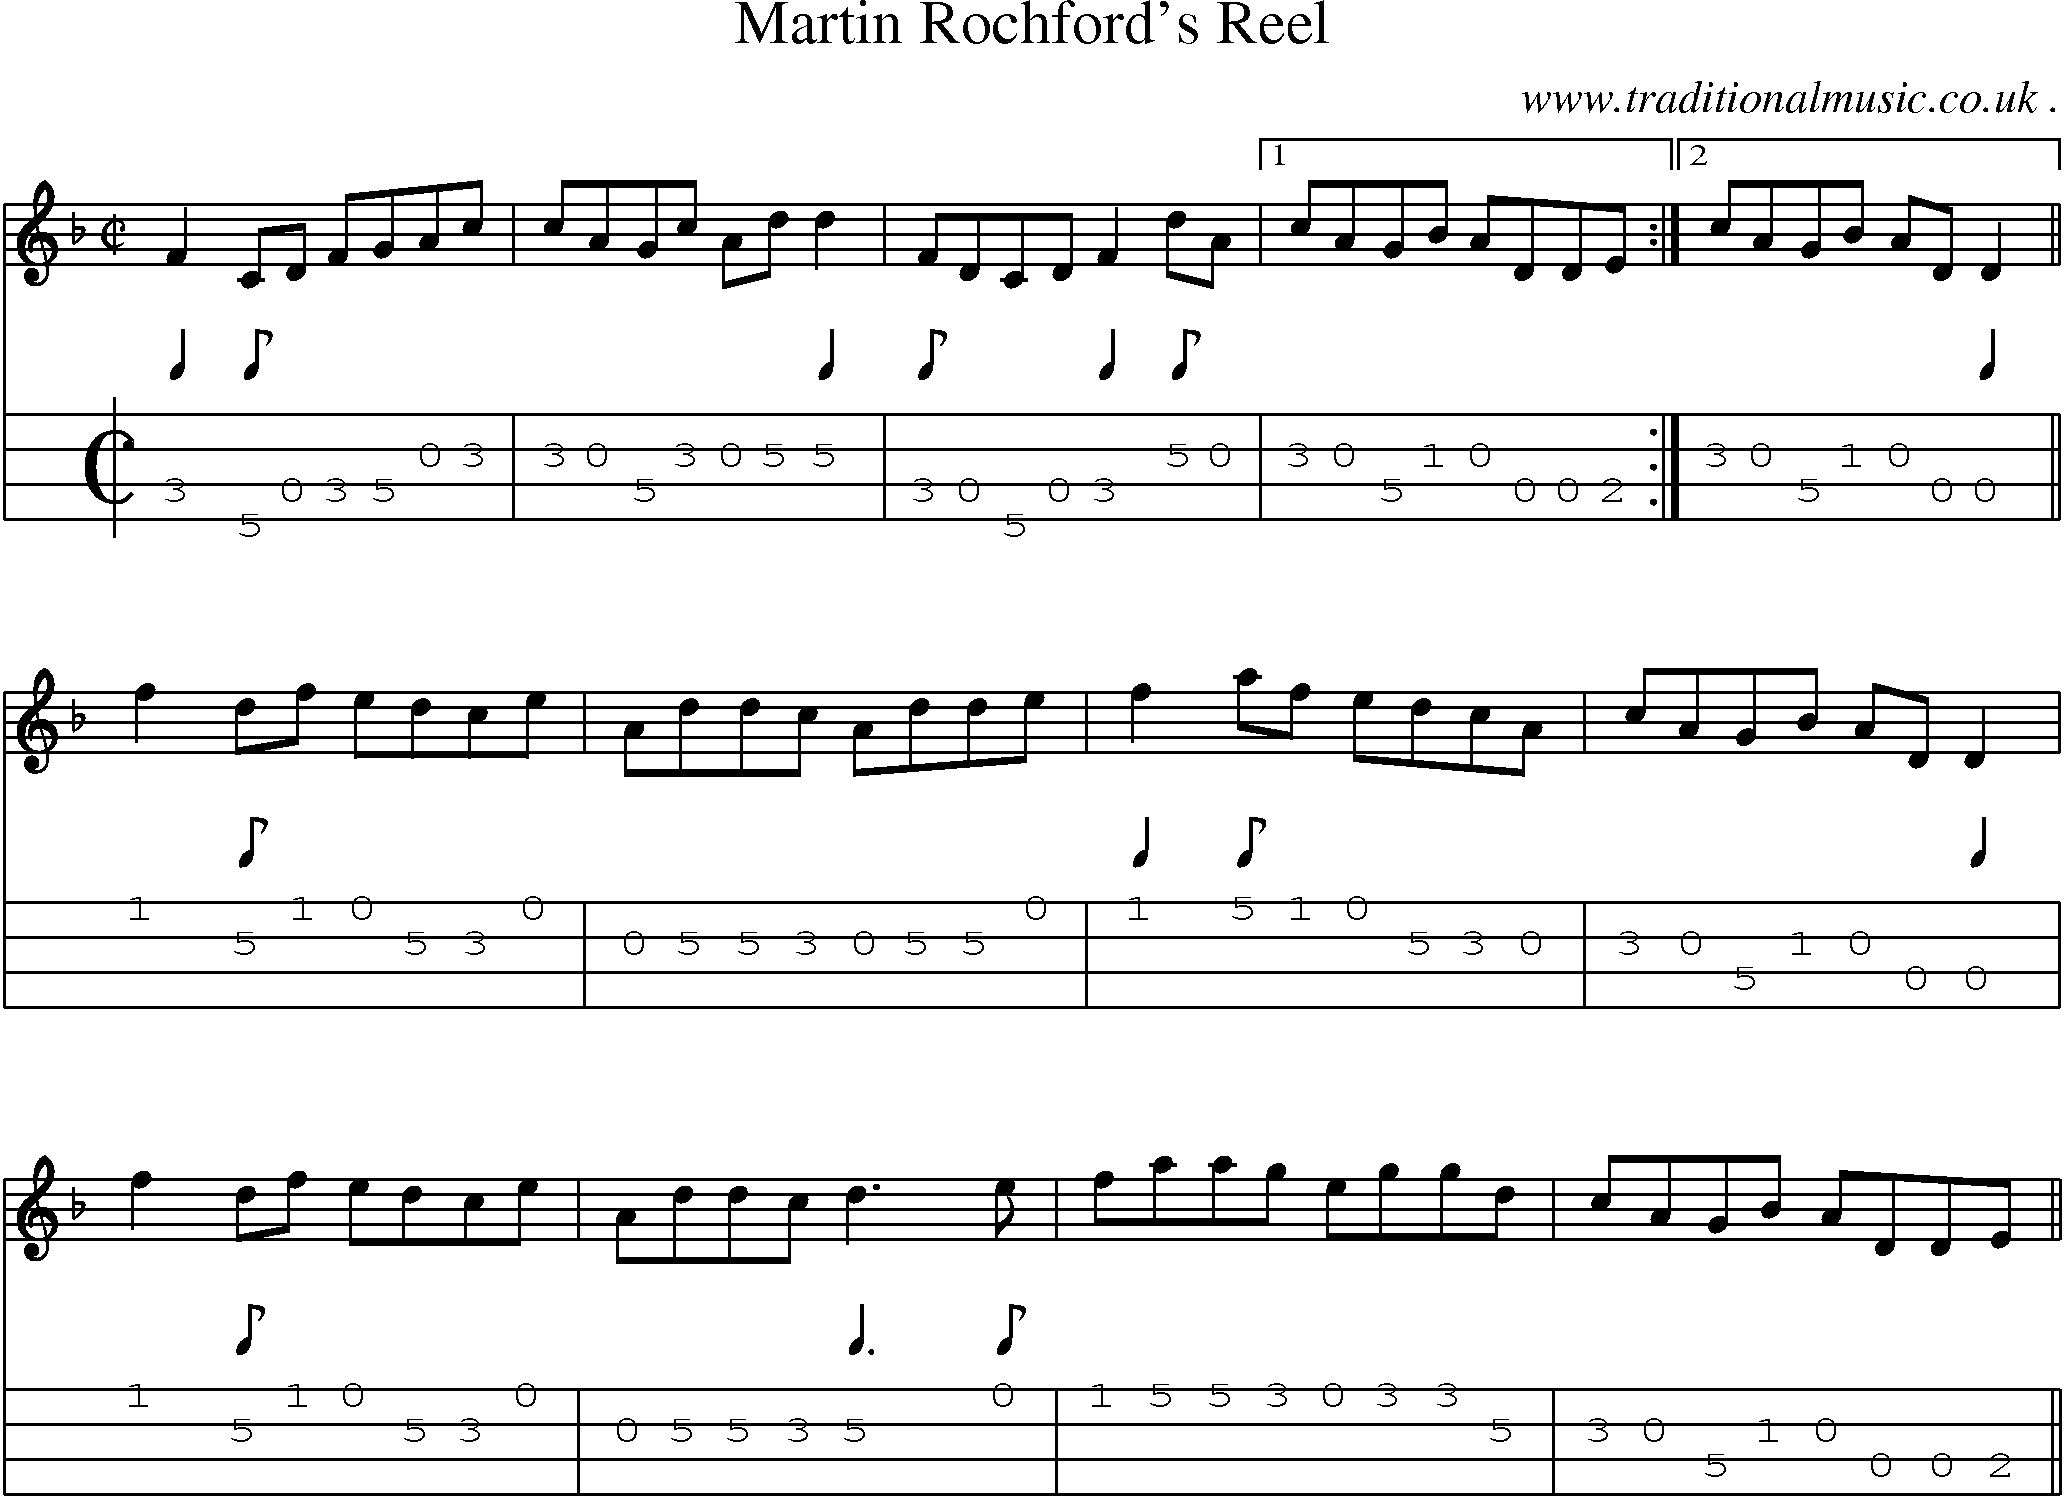 Sheet-Music and Mandolin Tabs for Martin Rochfords Reel